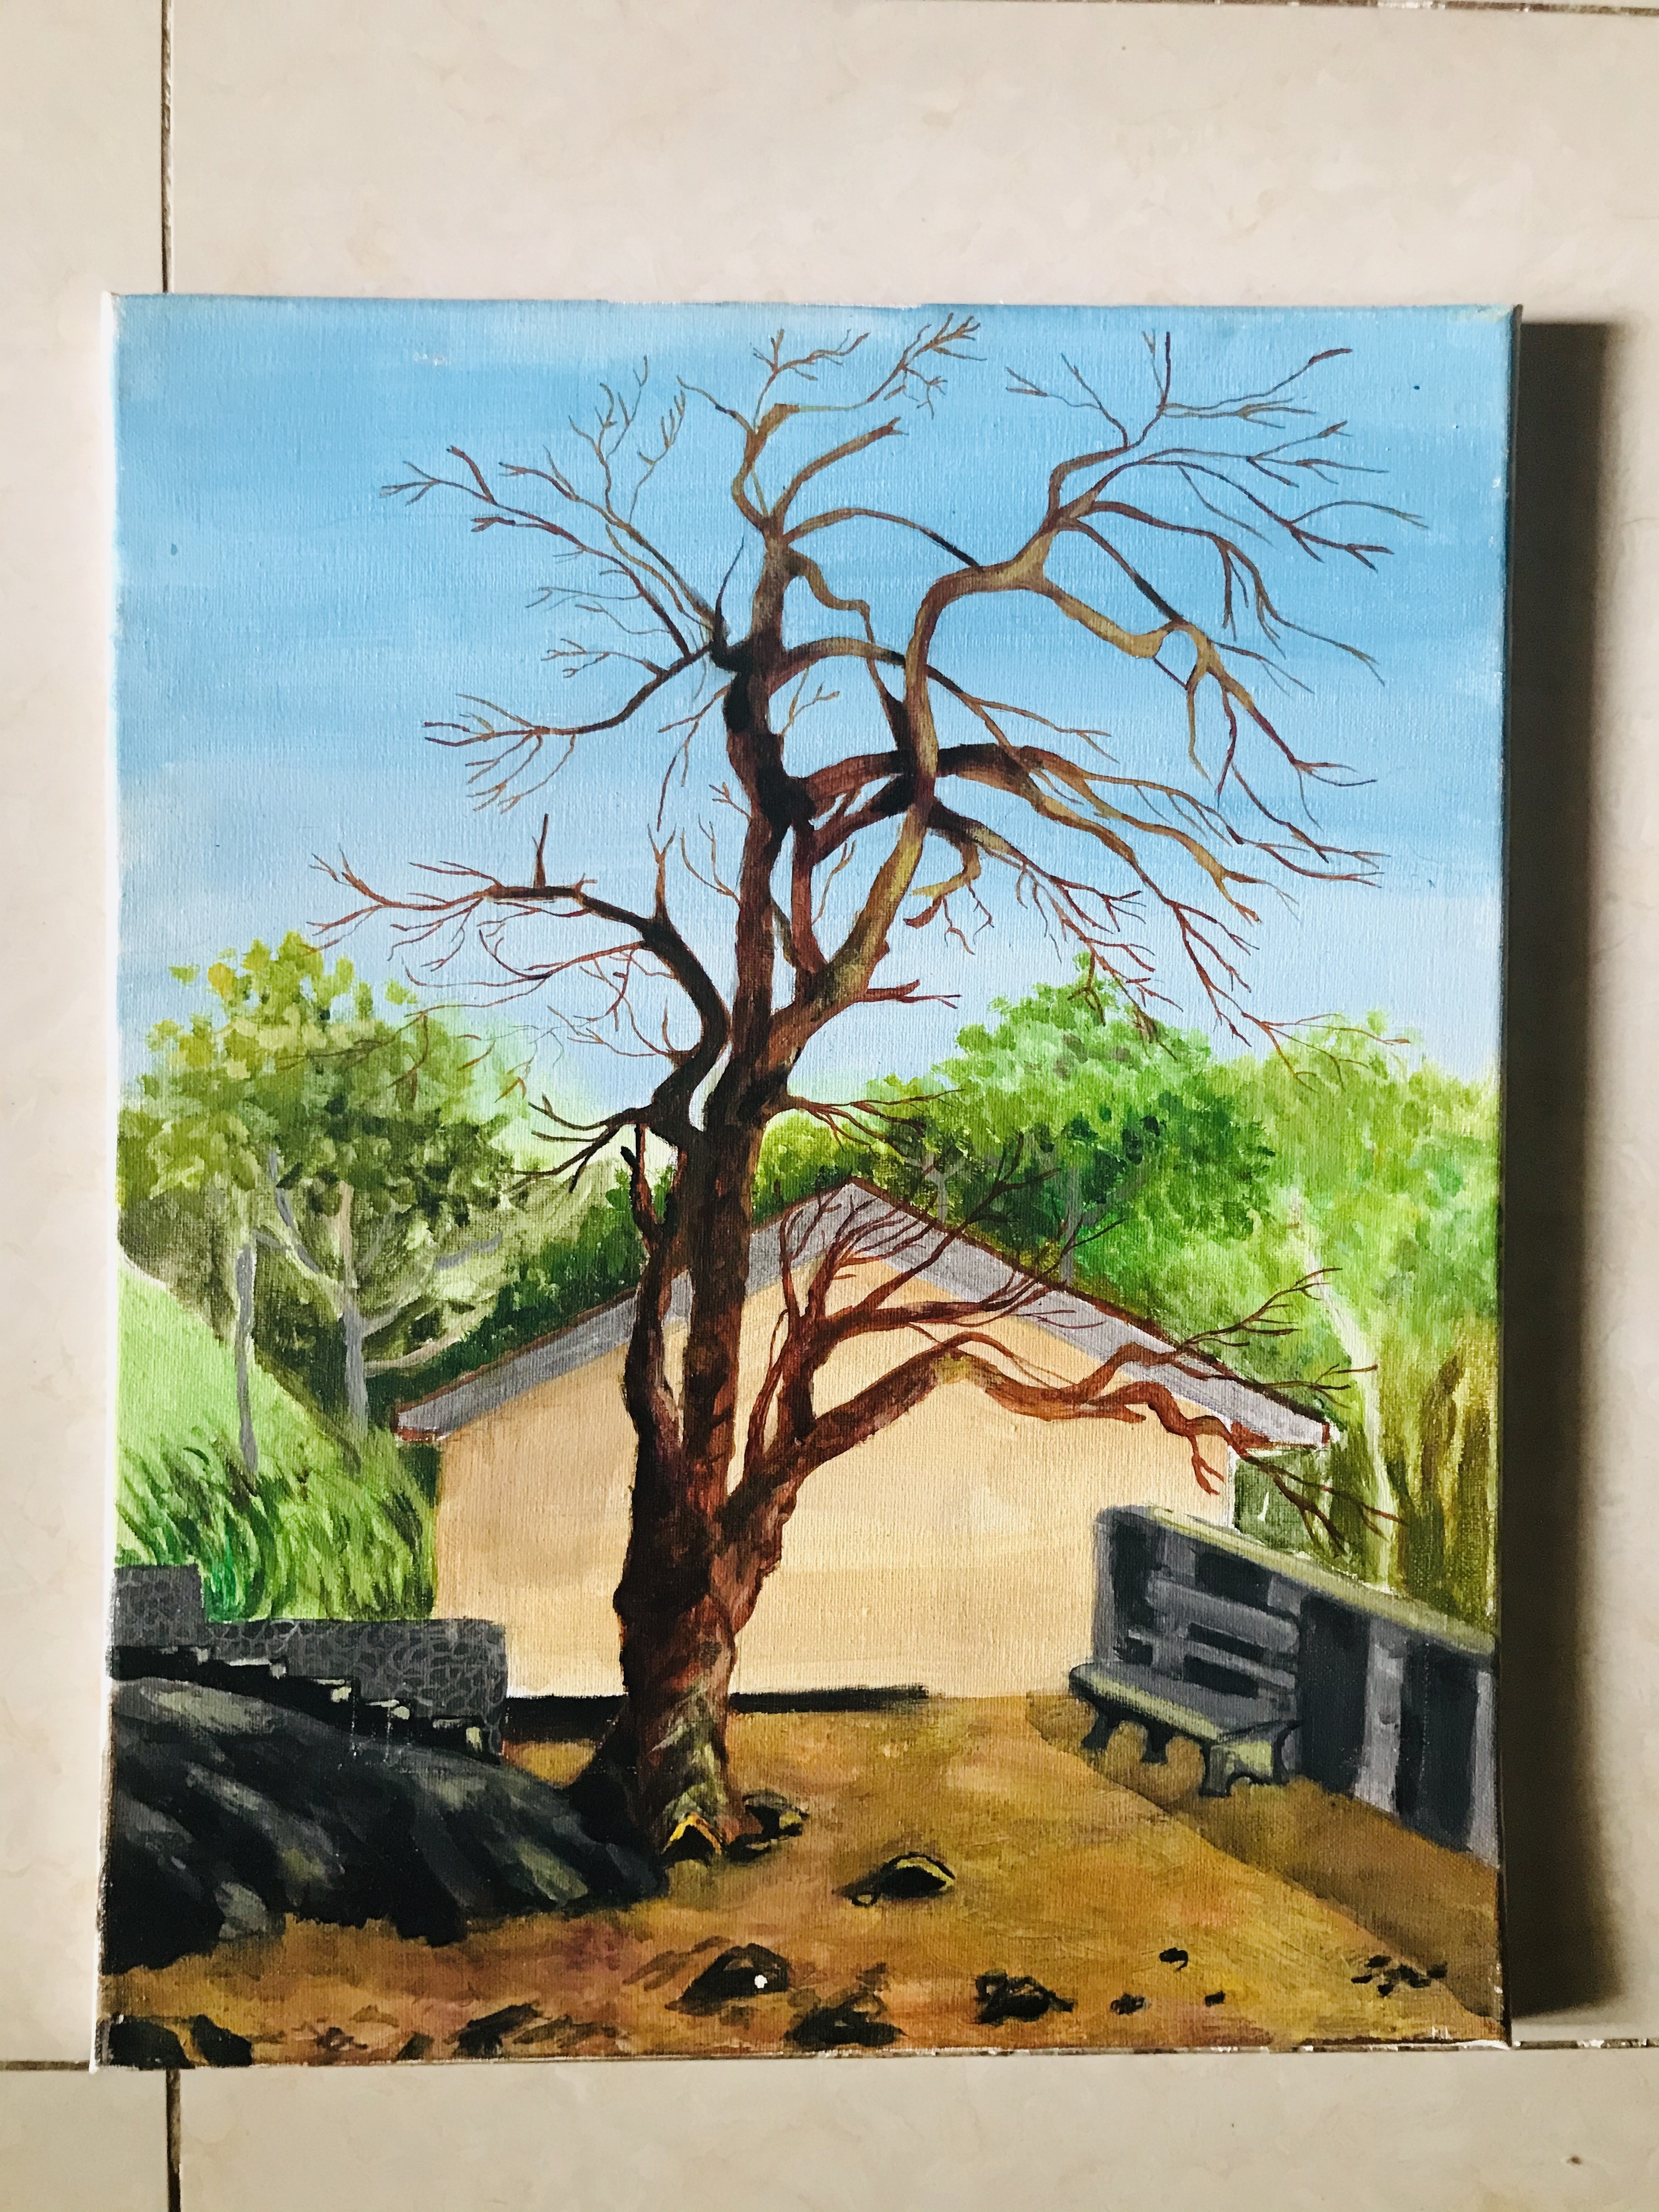 " A silent Tree" by Sanduni Bandara